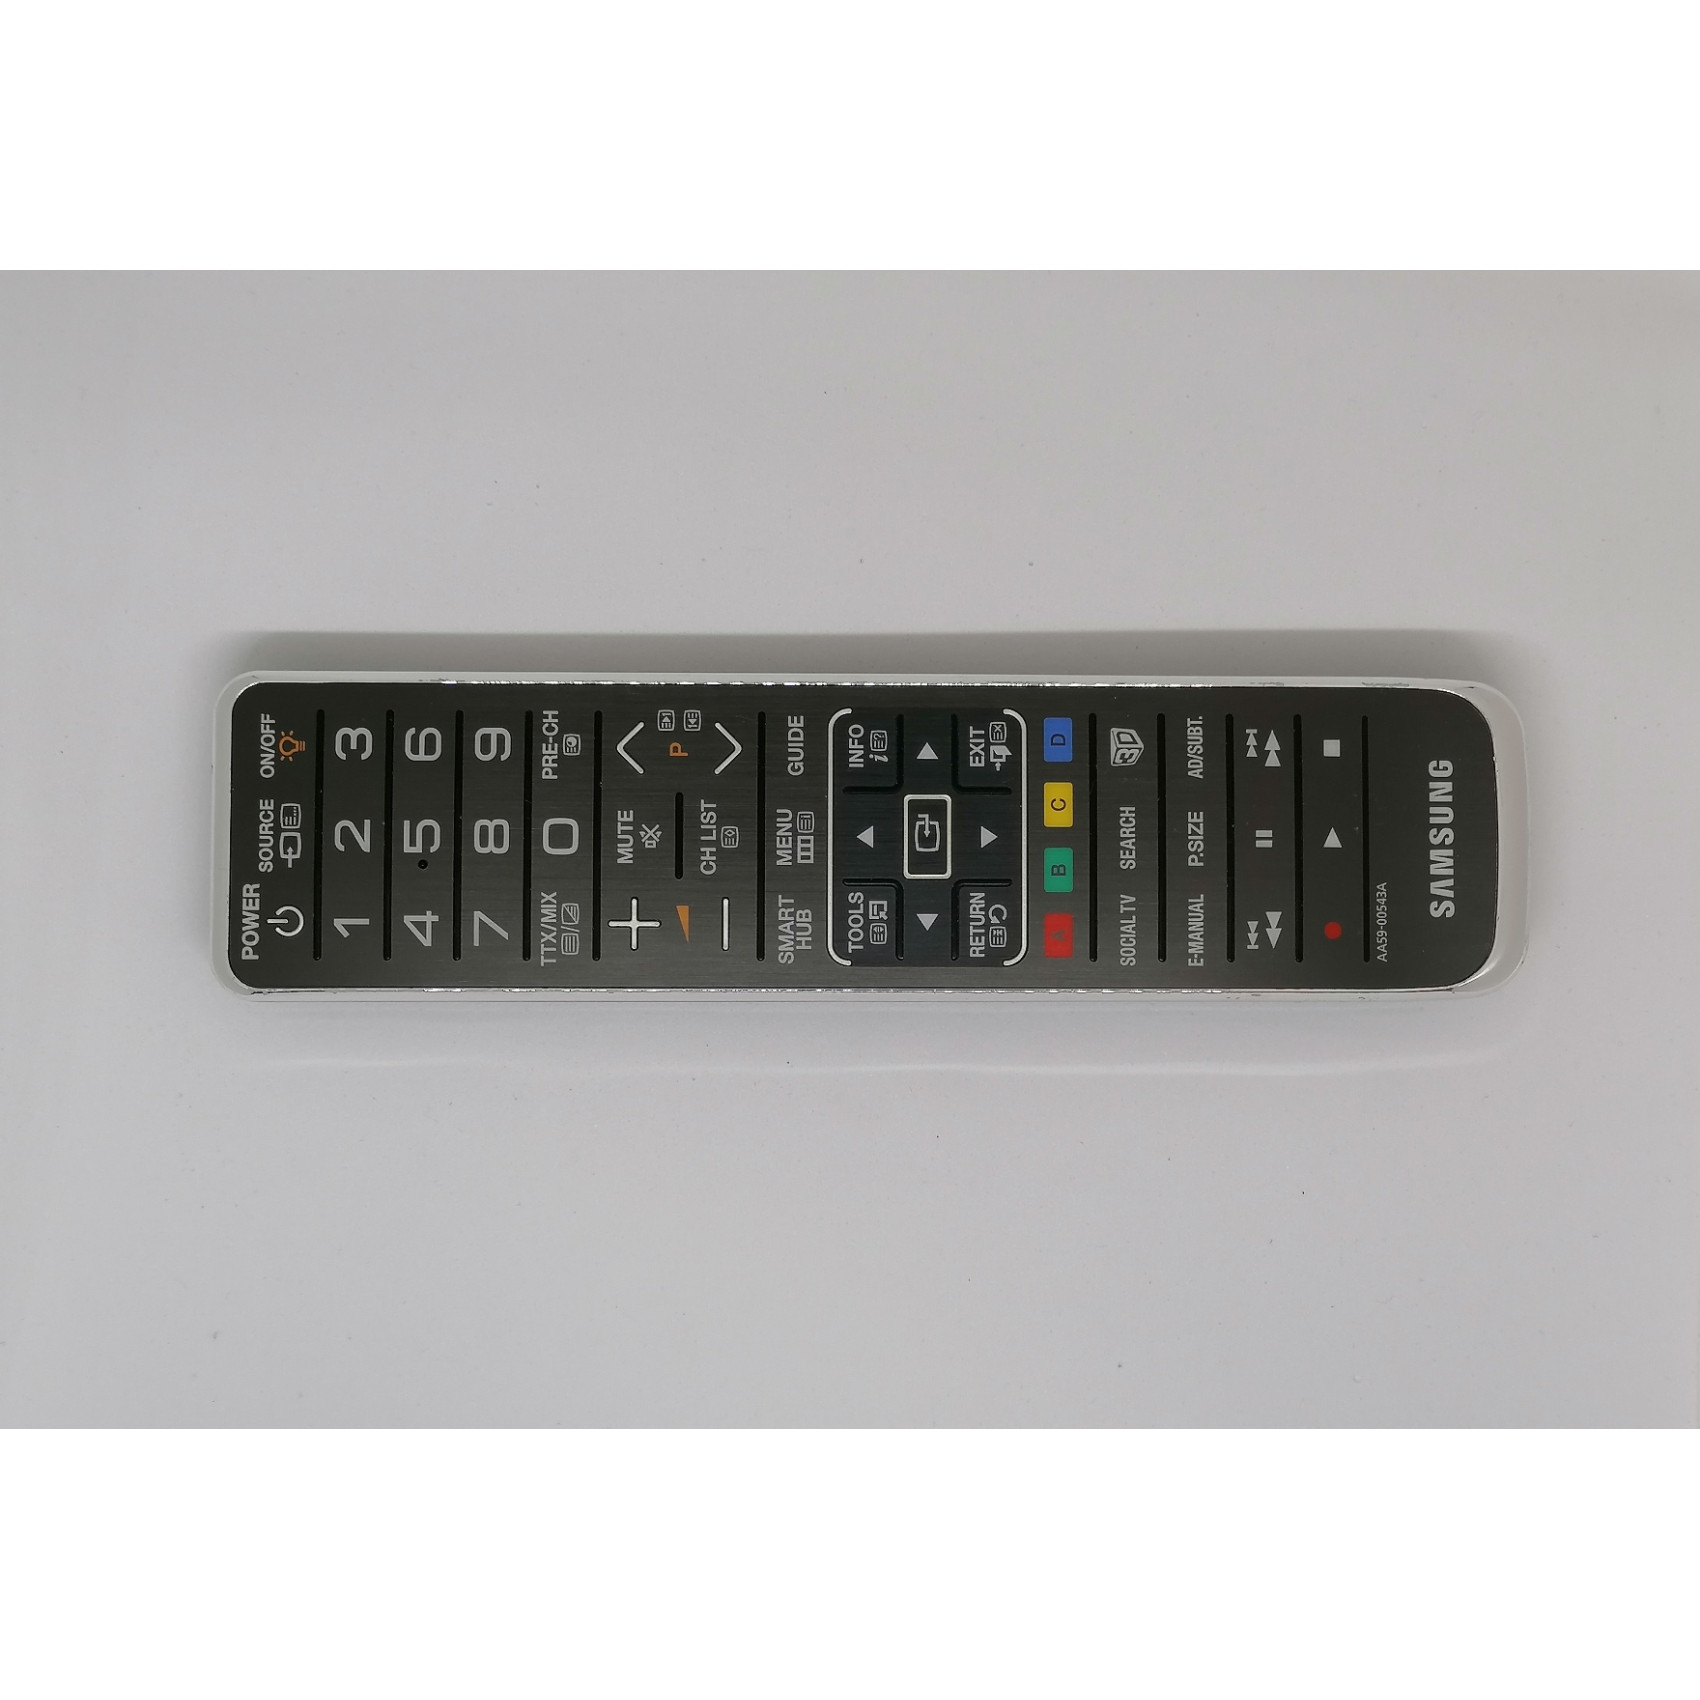 Original Samsung AA59-00543A remote control Smart TV